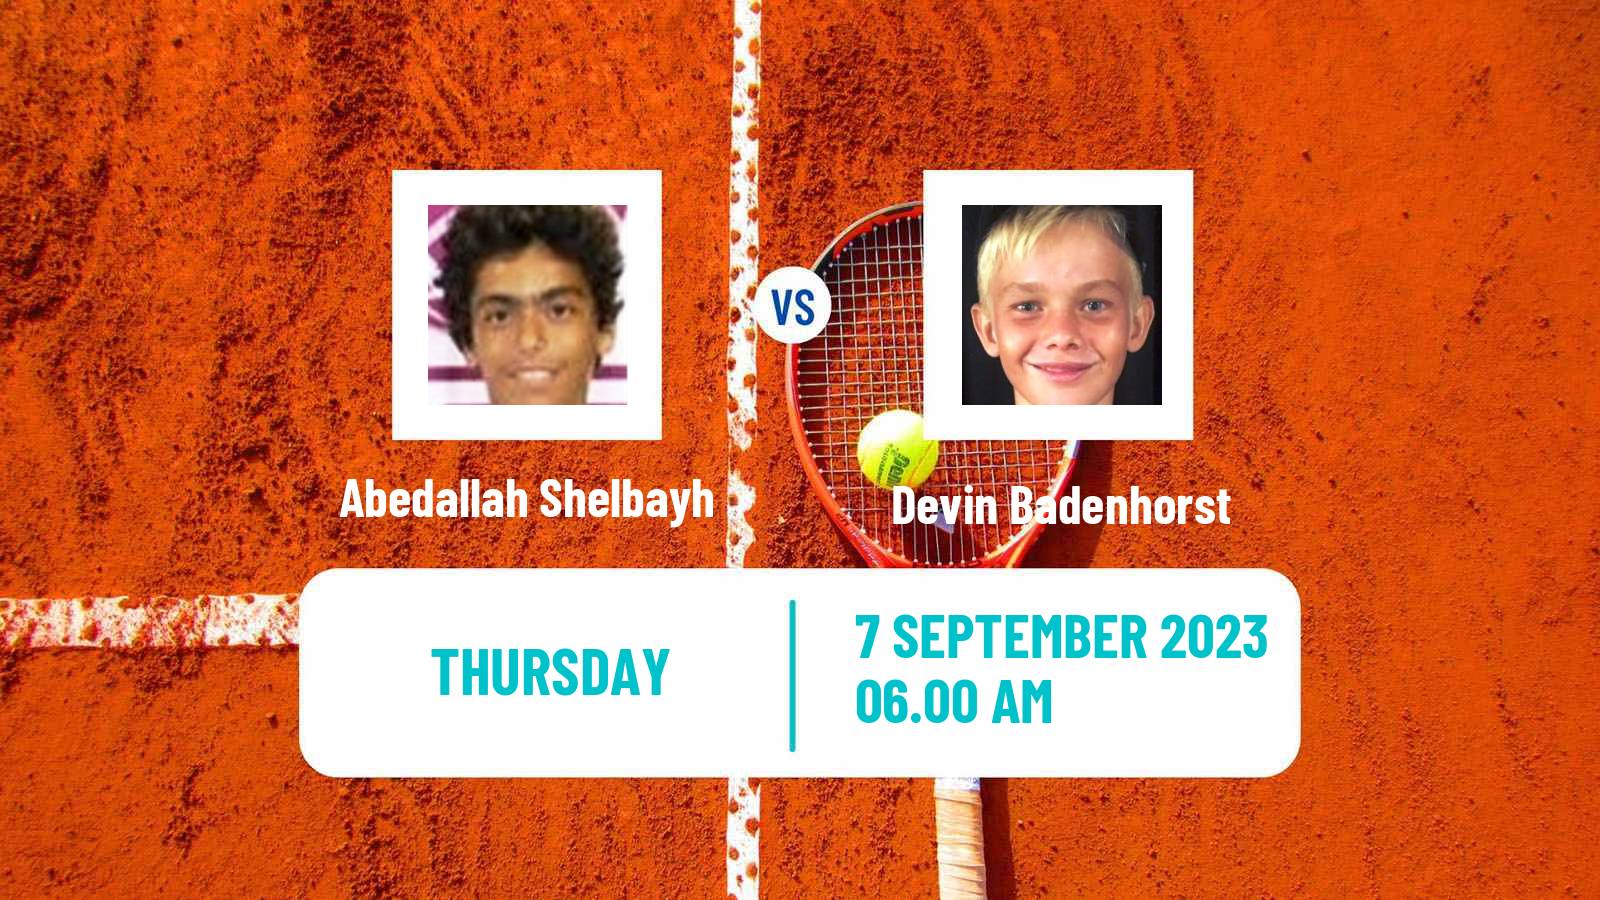 Tennis ITF M25 Monastir 5 Men Abedallah Shelbayh - Devin Badenhorst